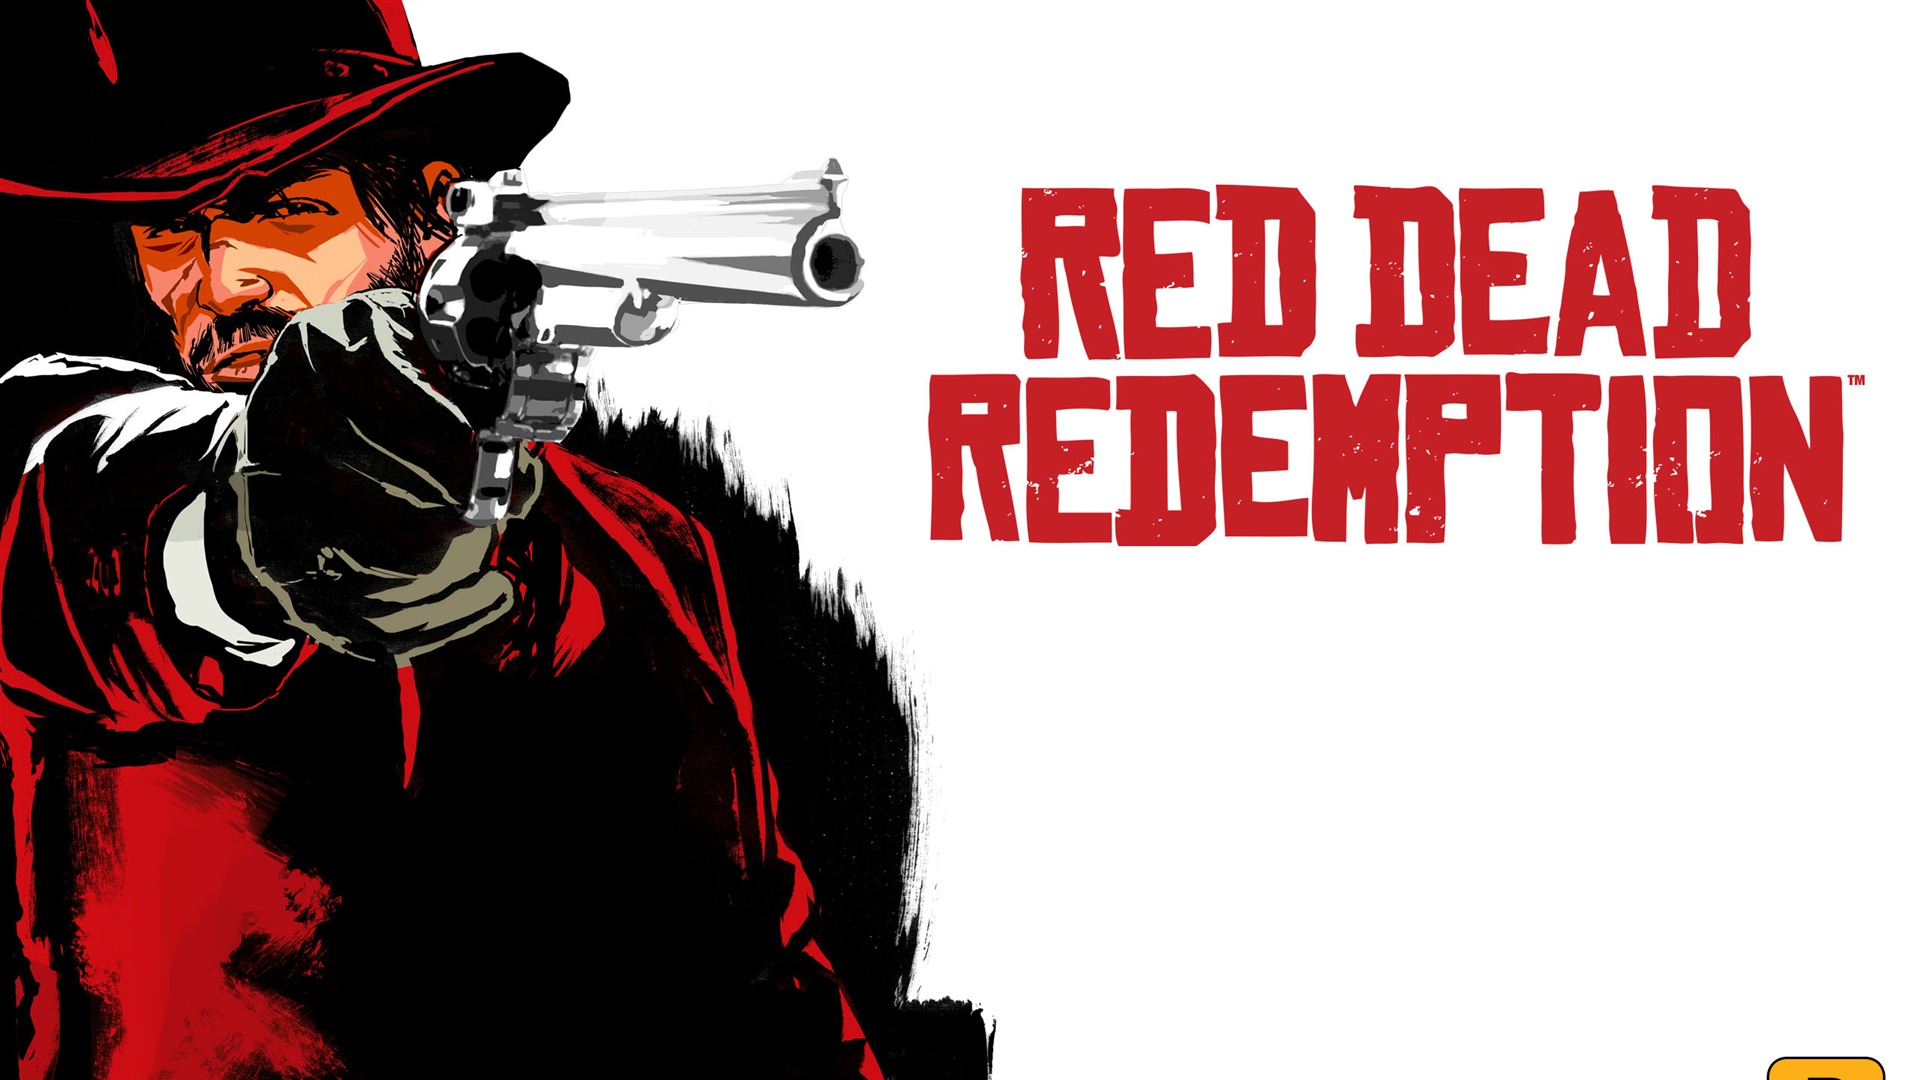 Red Dead Redemption HD papel tapiz #11 - 1920x1080